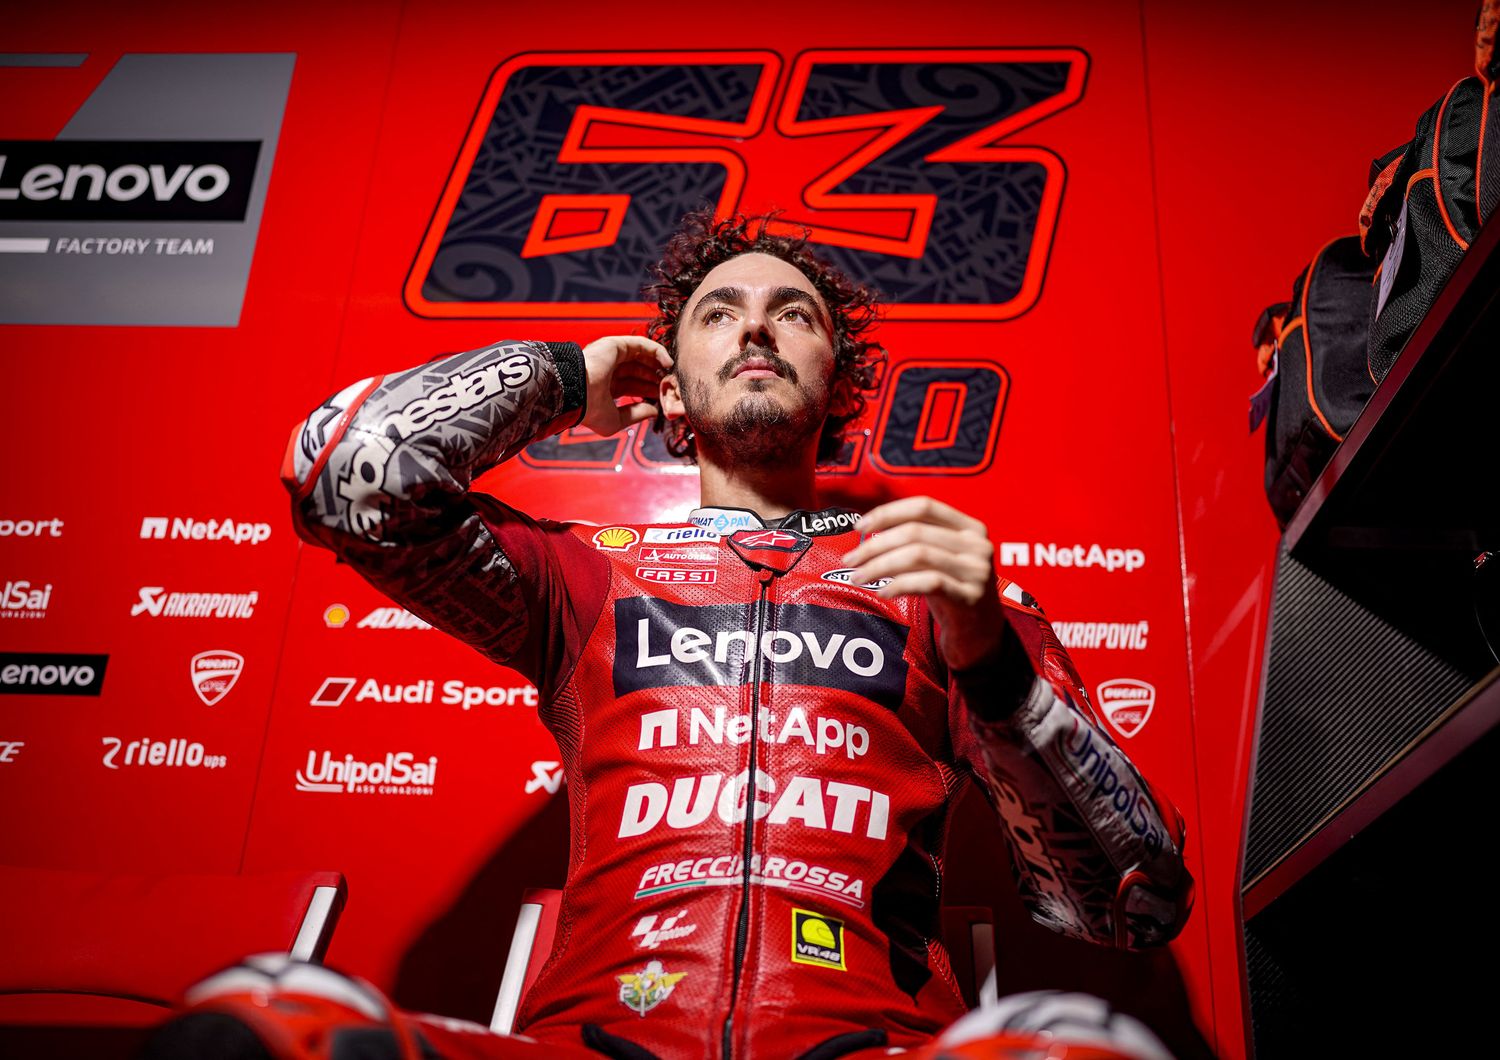 Francesco Bagnaia, team Ducati